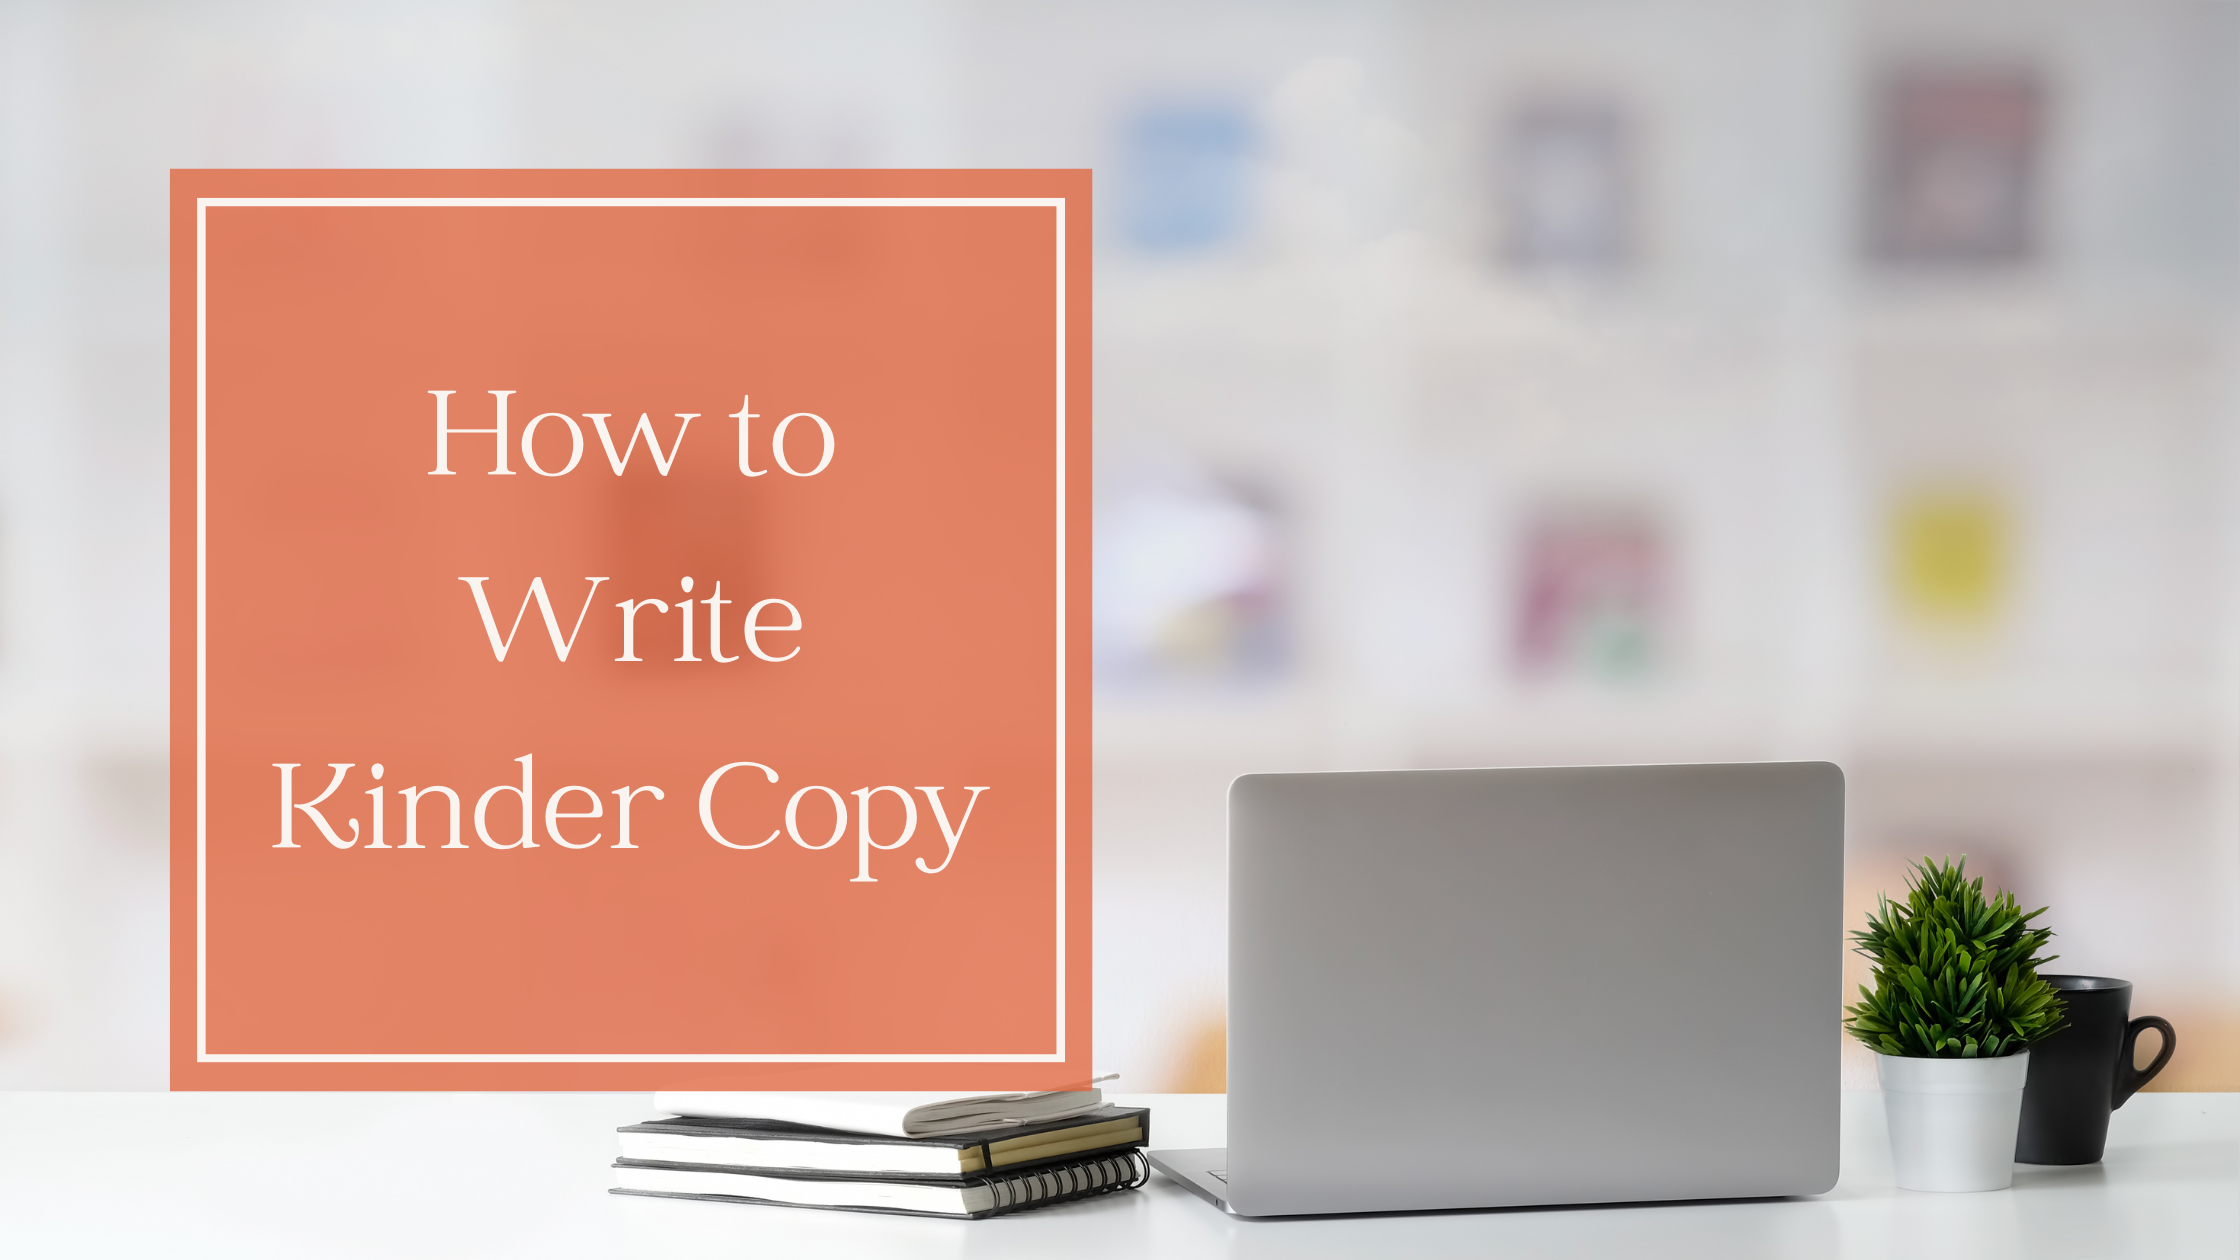 How to Write Kinder Copy